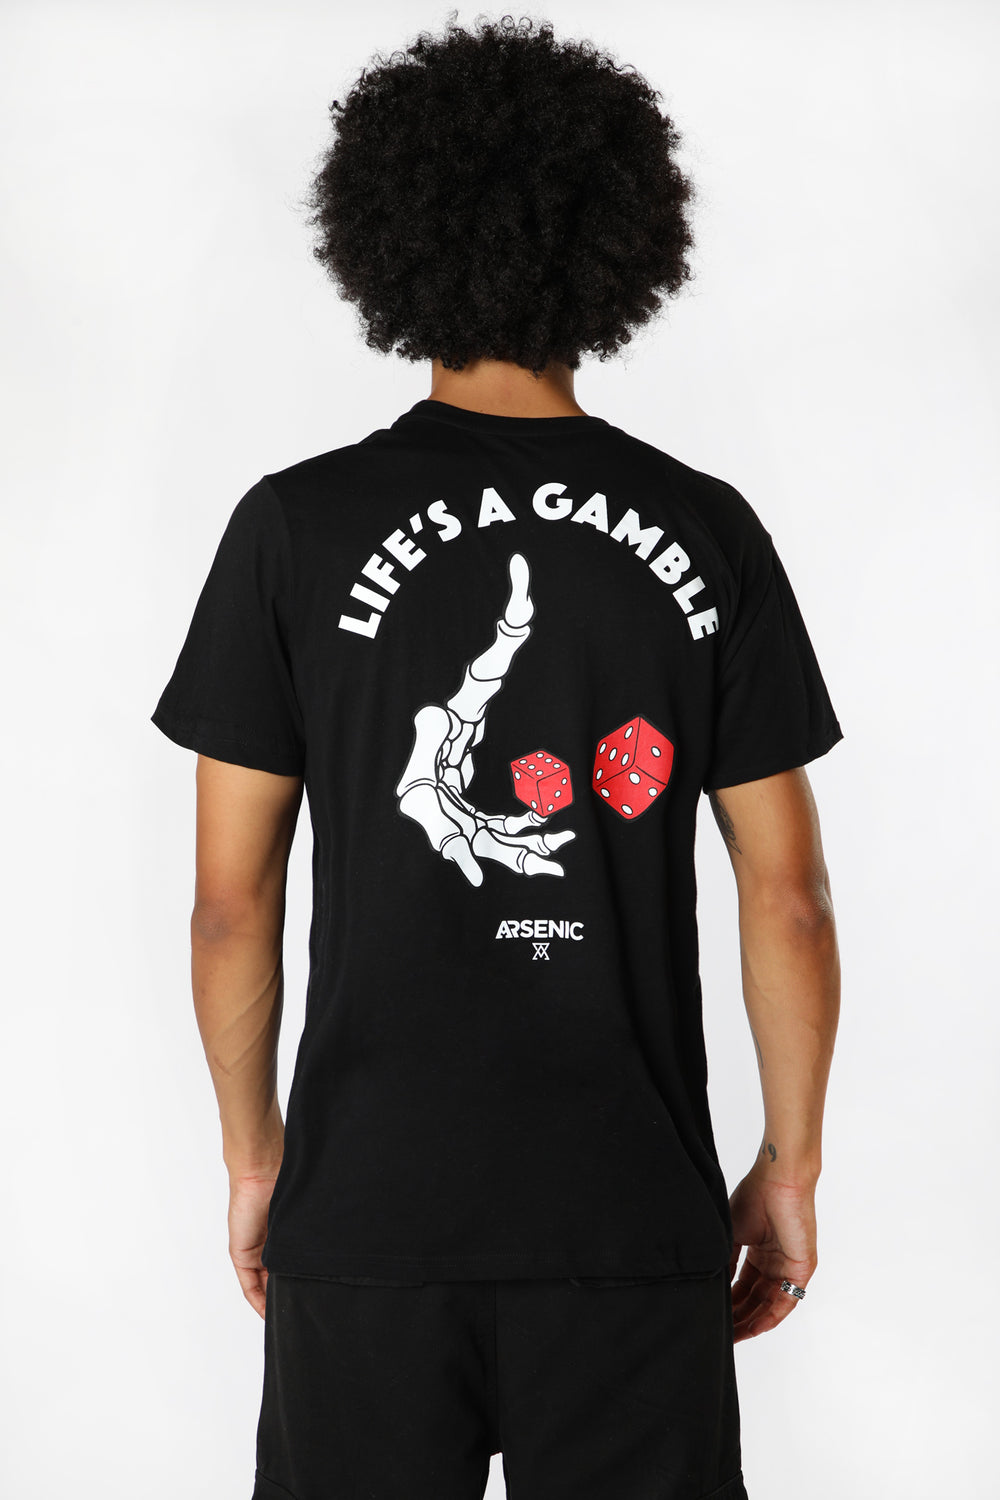 T-Shirt Life's A Gamble Arsenic Homme Noir